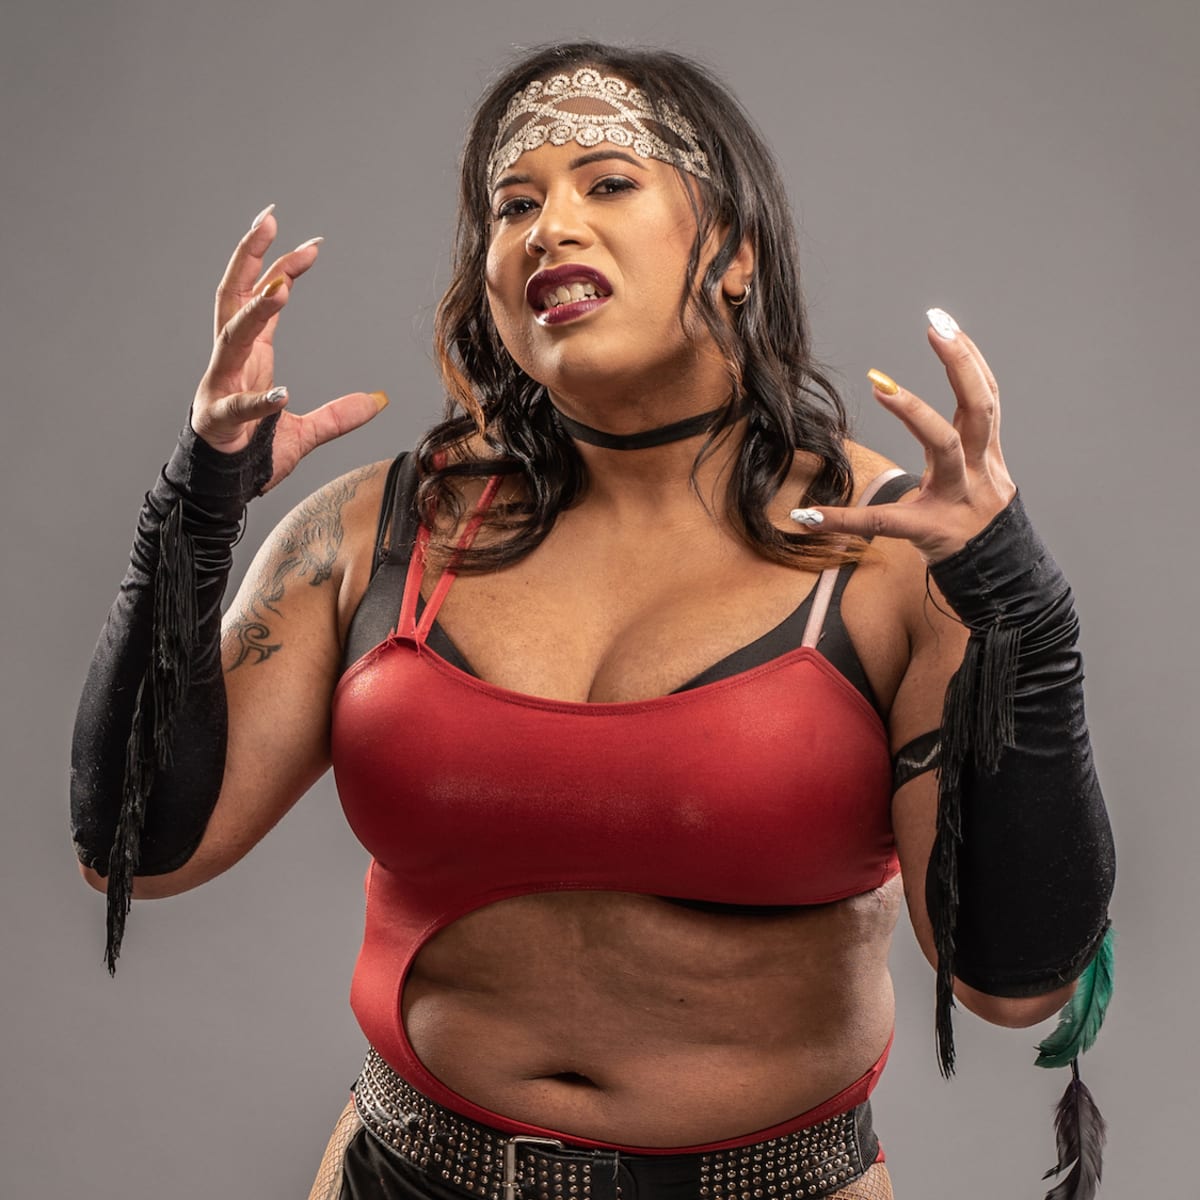 Nyla Rose AEW wrestler makes history as transgender performer pic pic